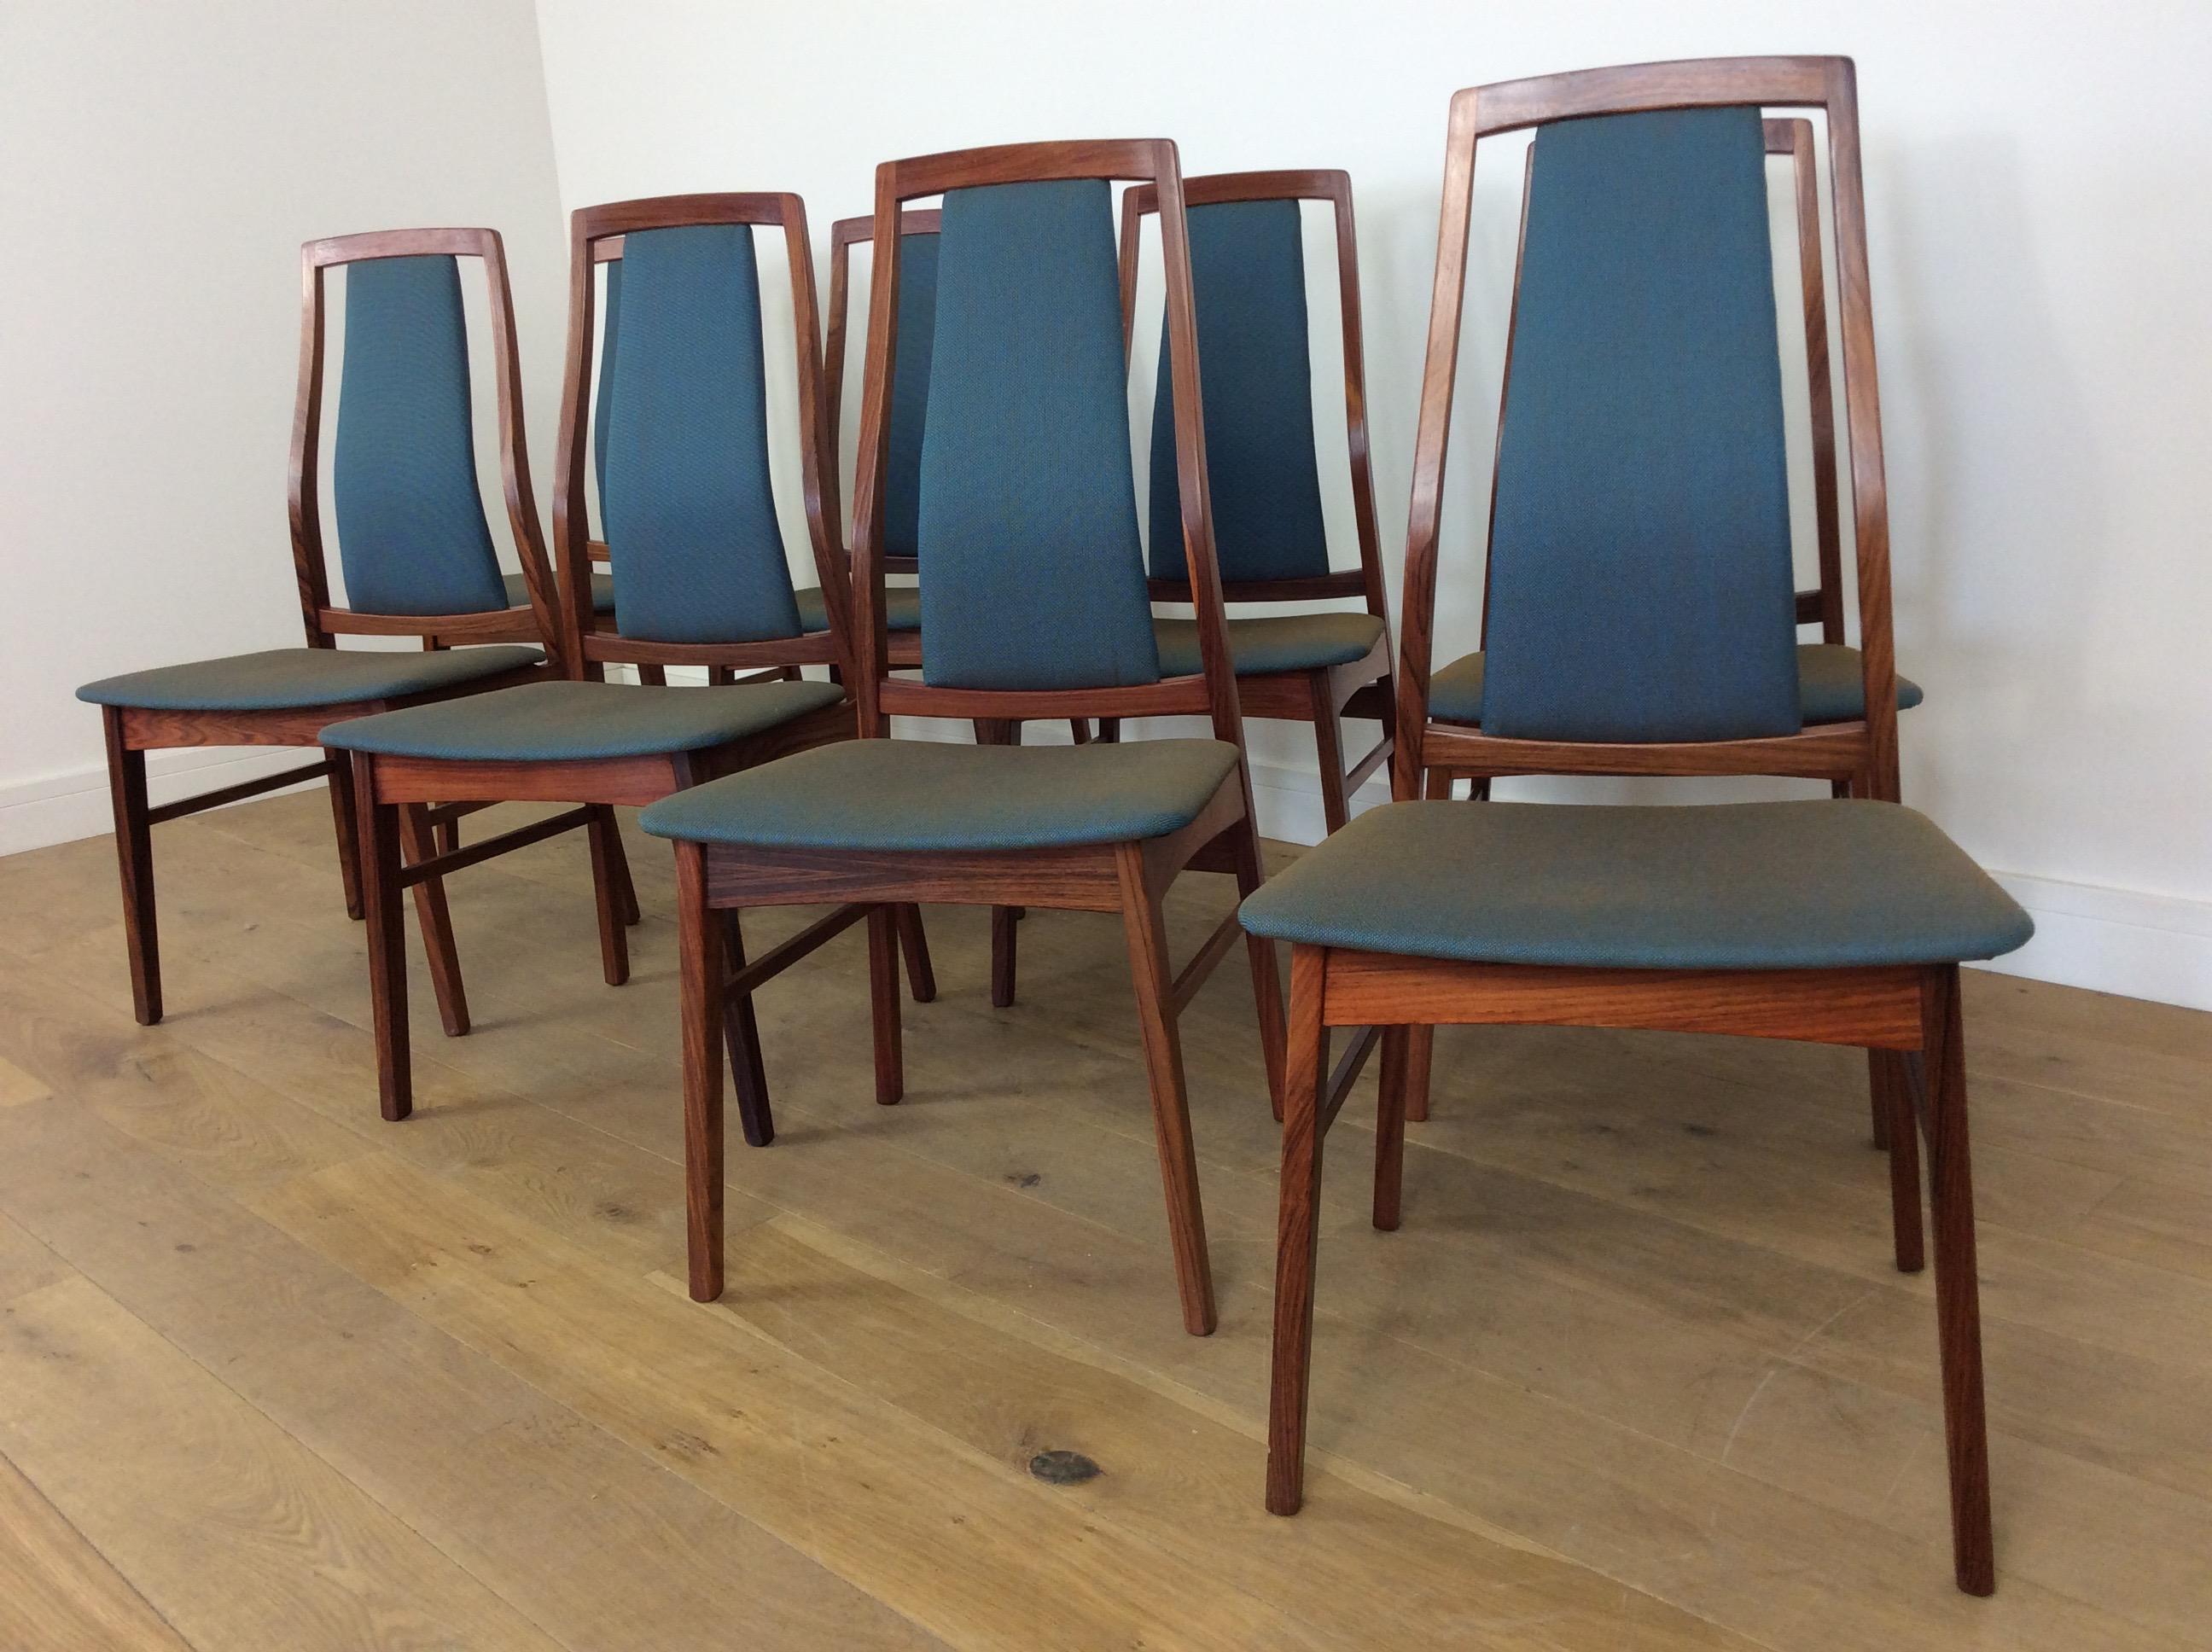 Midcentury rosewood dining chairs.
A set of eight midcentury rosewood dining chairs. Designed by Niels Koefoed for Koefoed Hornslet.
Measures: Chairs 99 cm H, 48 cm W, 47 cm D, seat H 45 cm, seat D 41 cm.
Danish, circa 1960.